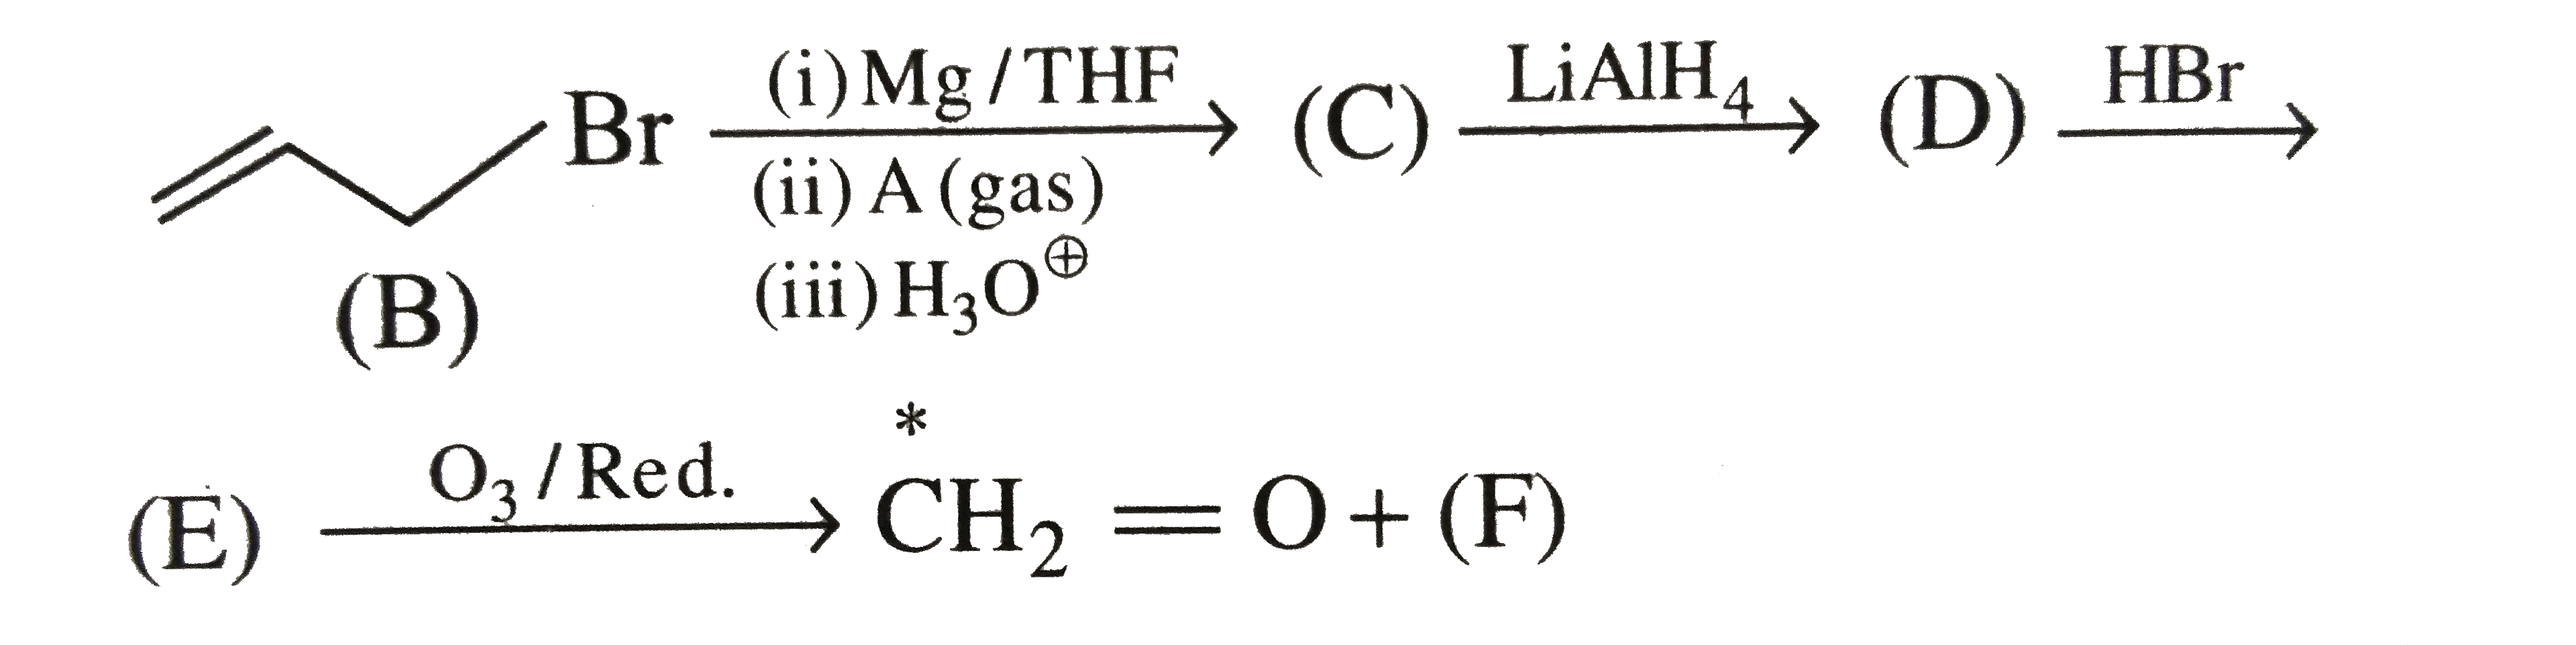 Identify (A) and (C)   Ca overset ** C O3 + H2 SO4 rarr (A) (gas) [C^** deno tes C^14].   .